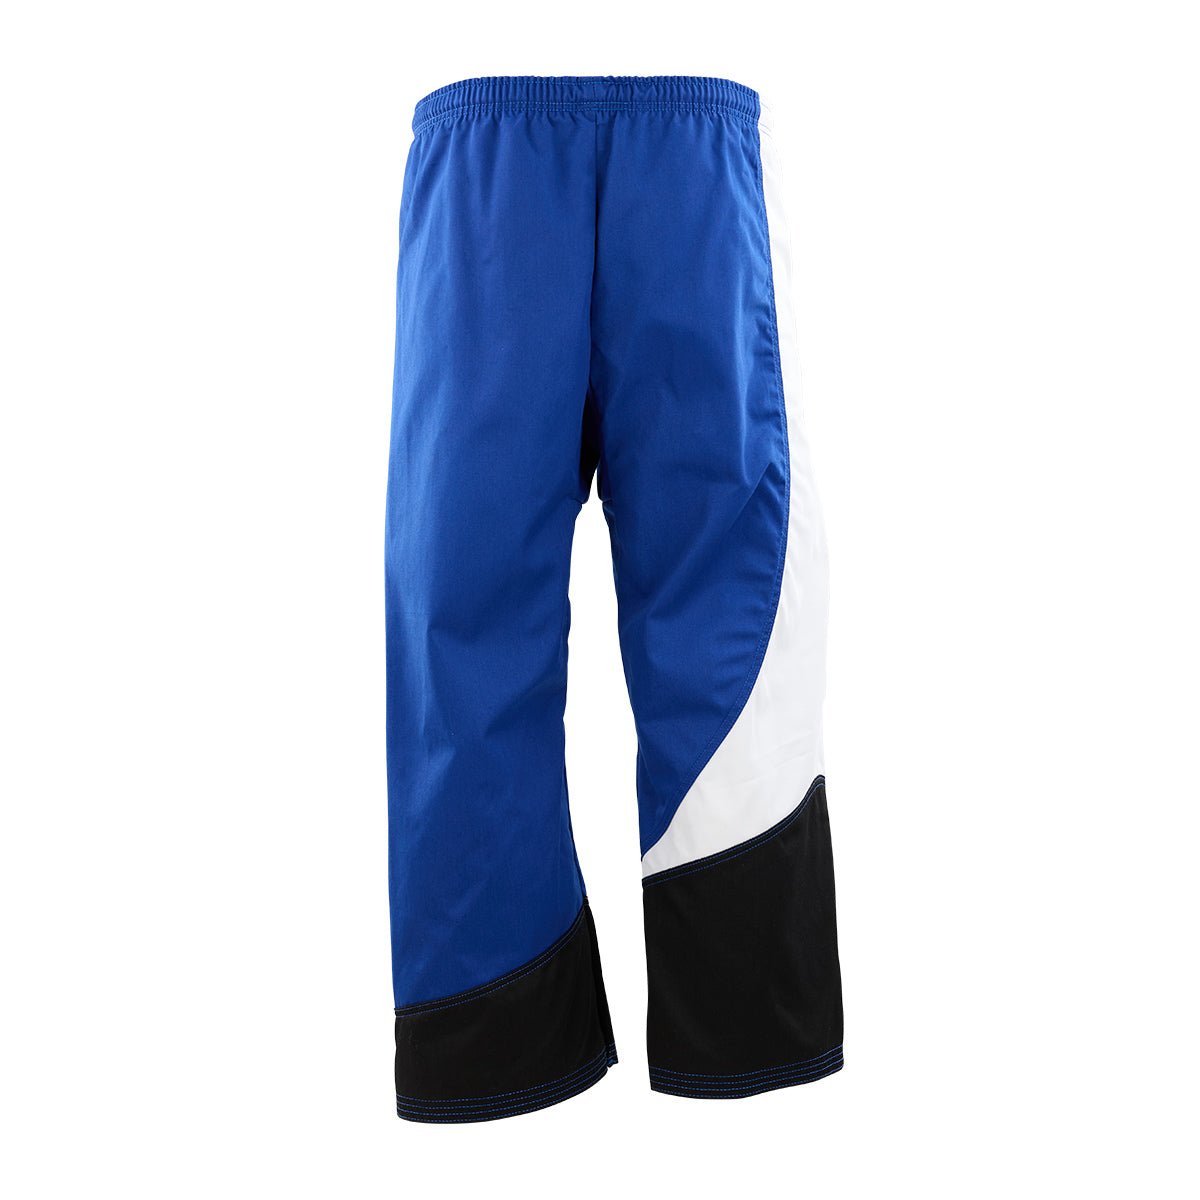 Tri-Color Diagonal Program Uniform Pants